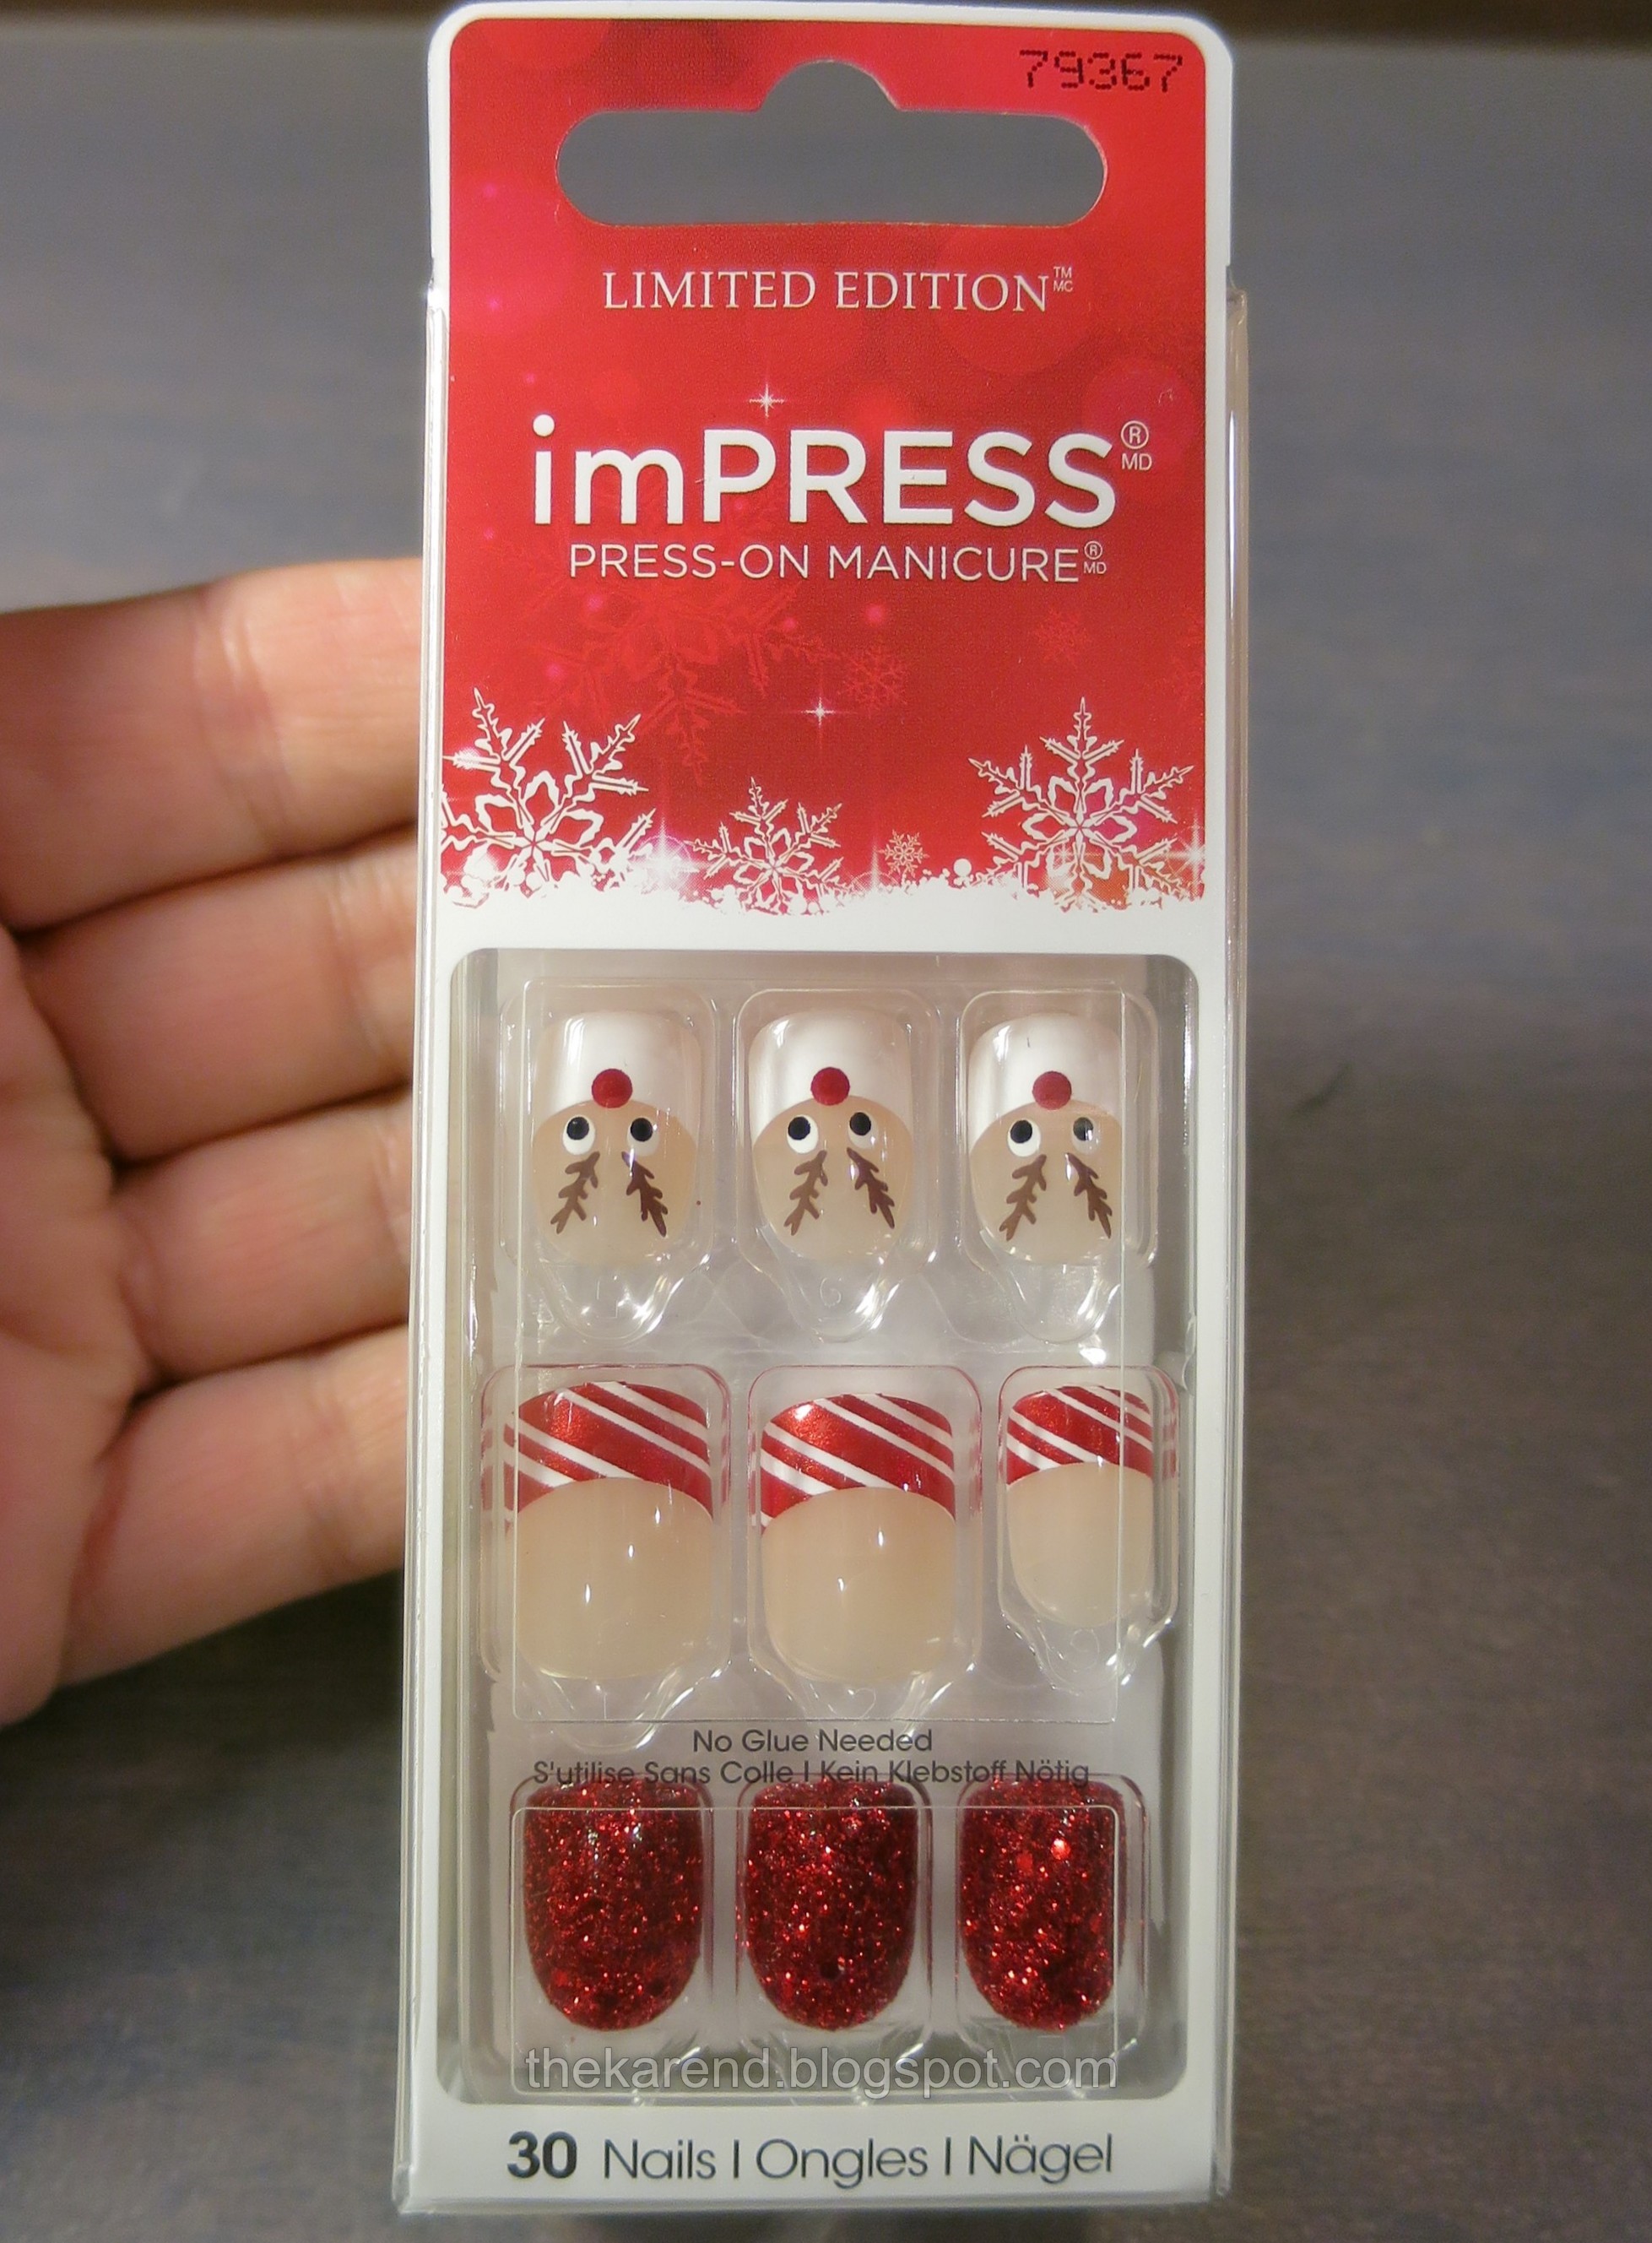 imPRESS Limited-Edition Holiday Press-On Nails - 'Tis the Season